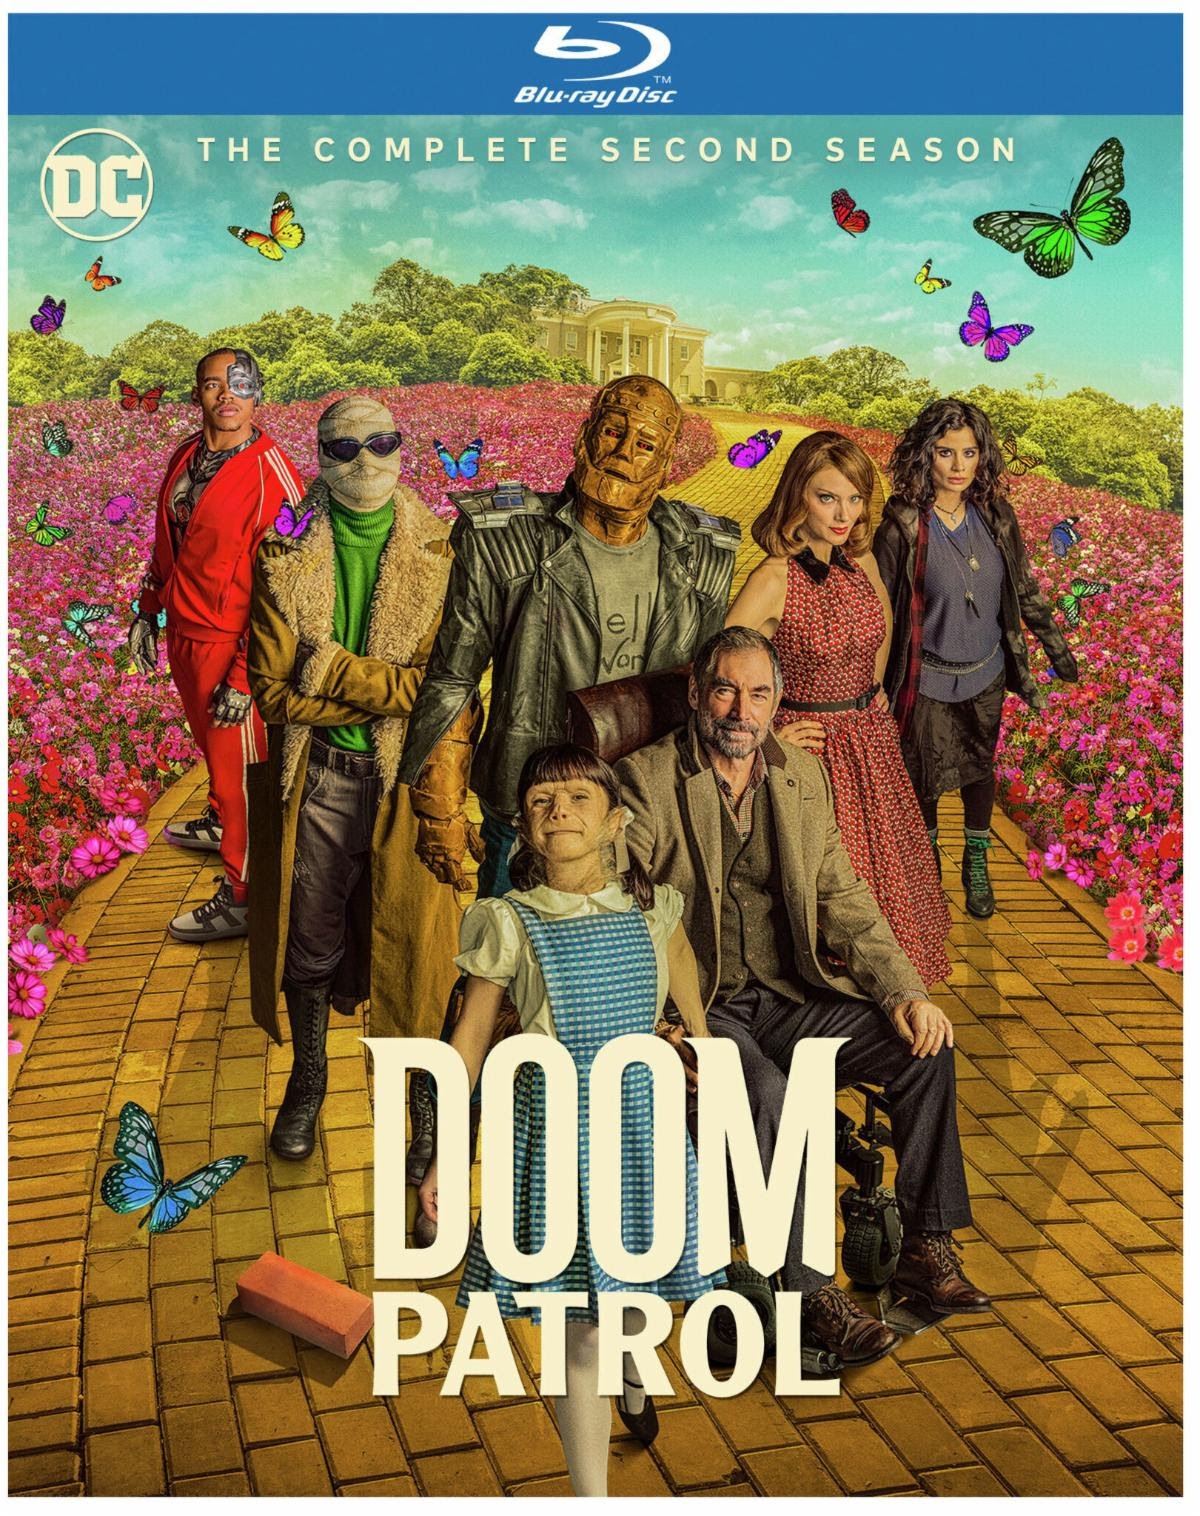 Doom Patrol Season Two on Blu-ray & DVD January 26, 2021